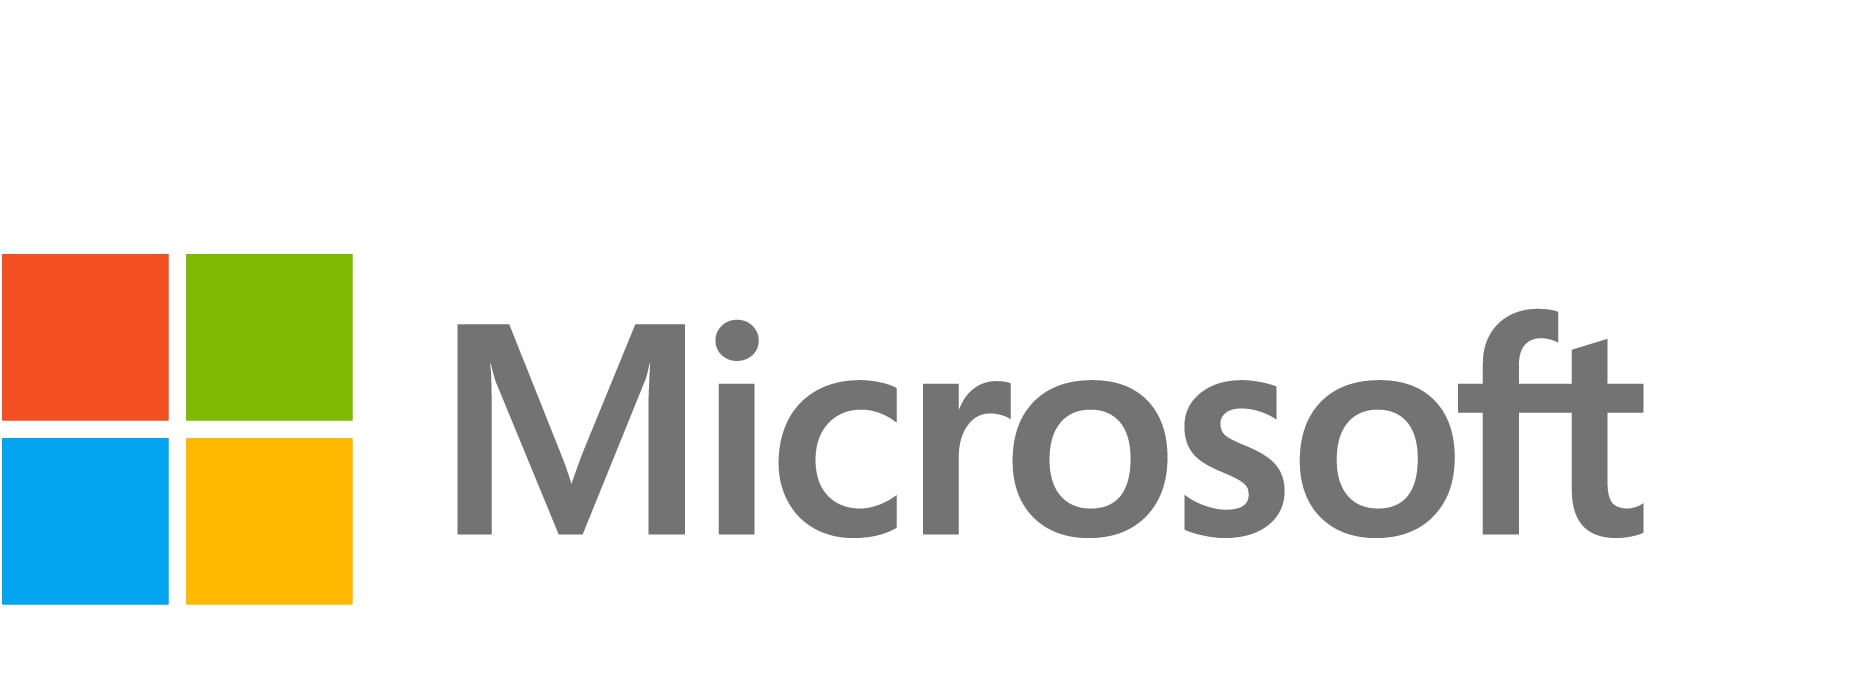 Microsoft Virtual Desktop Access - subscription license (12 month) - 1 user